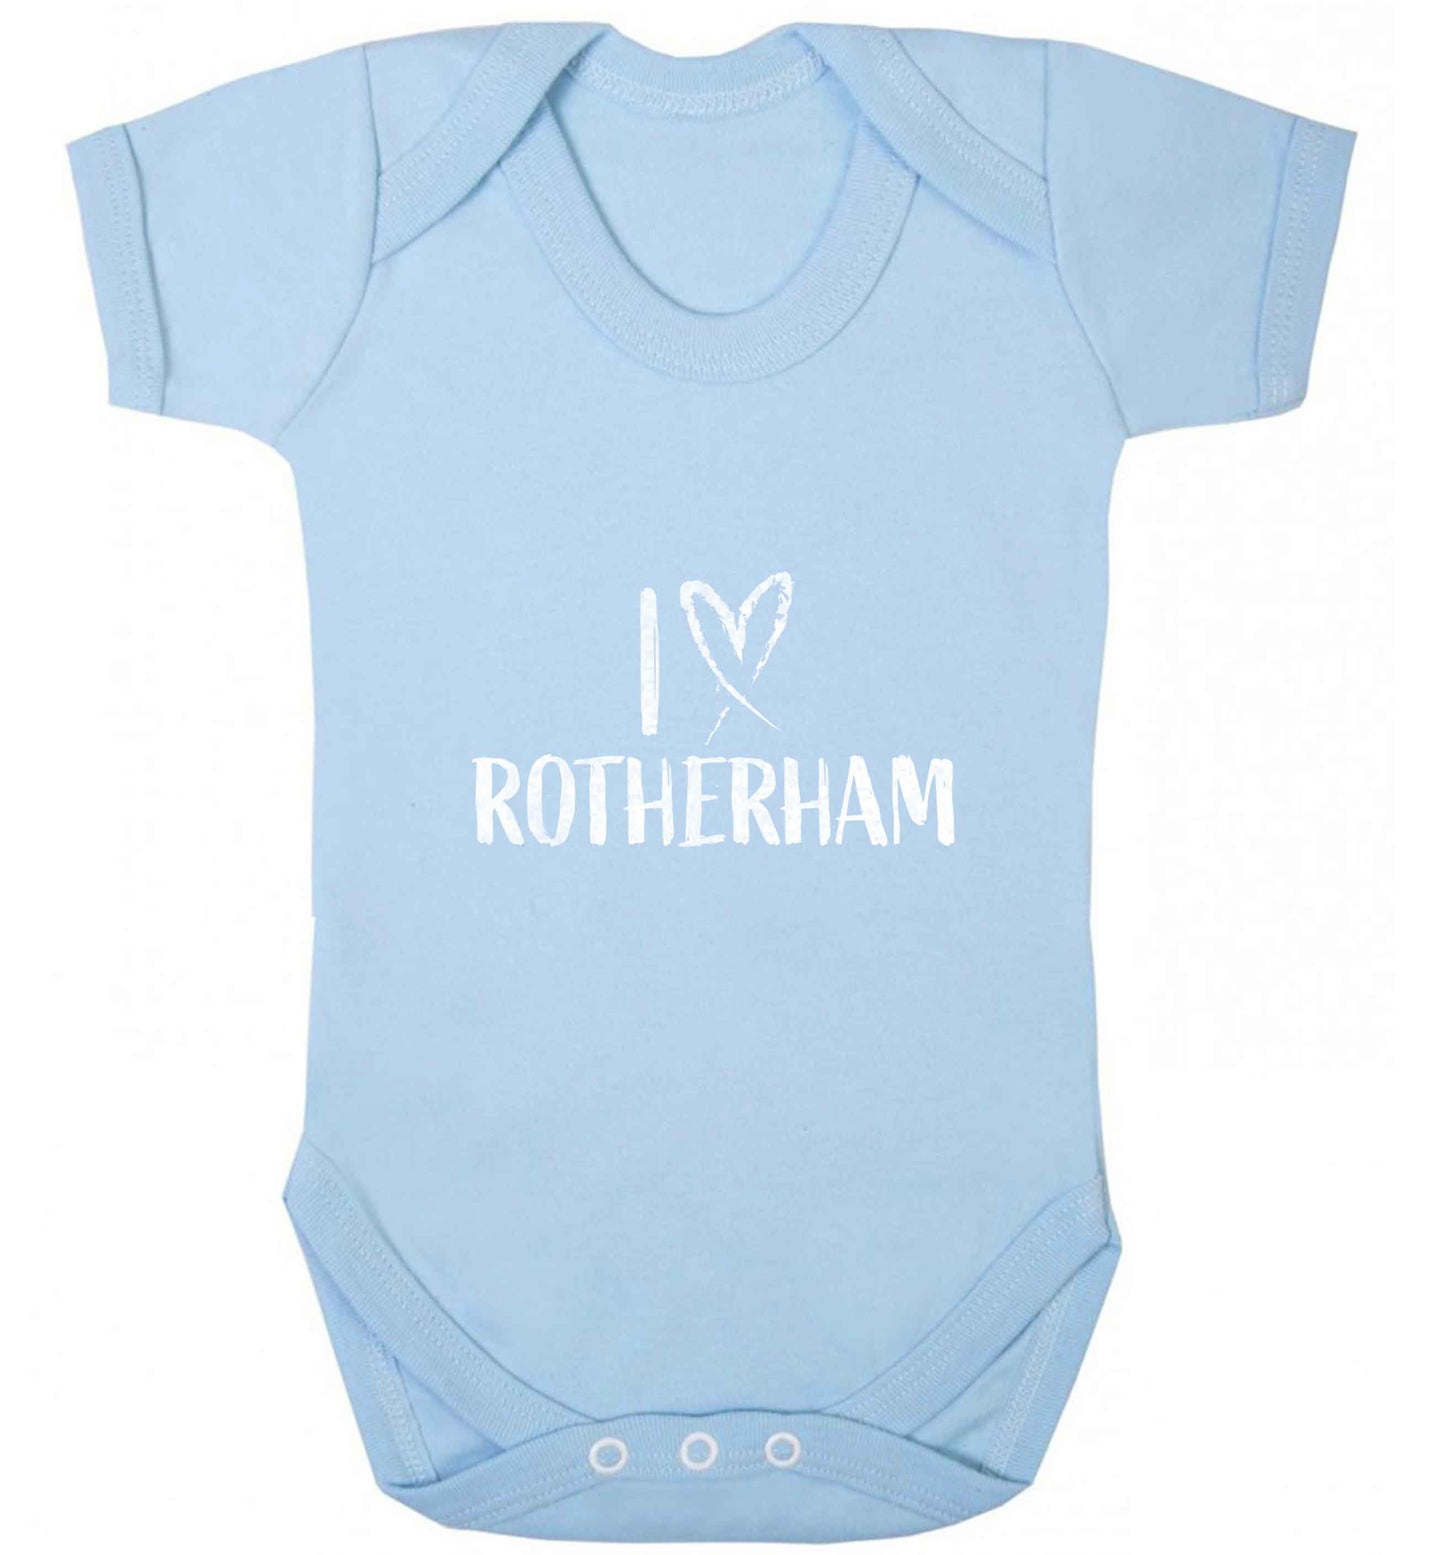 I love Rotherham baby vest pale blue 18-24 months